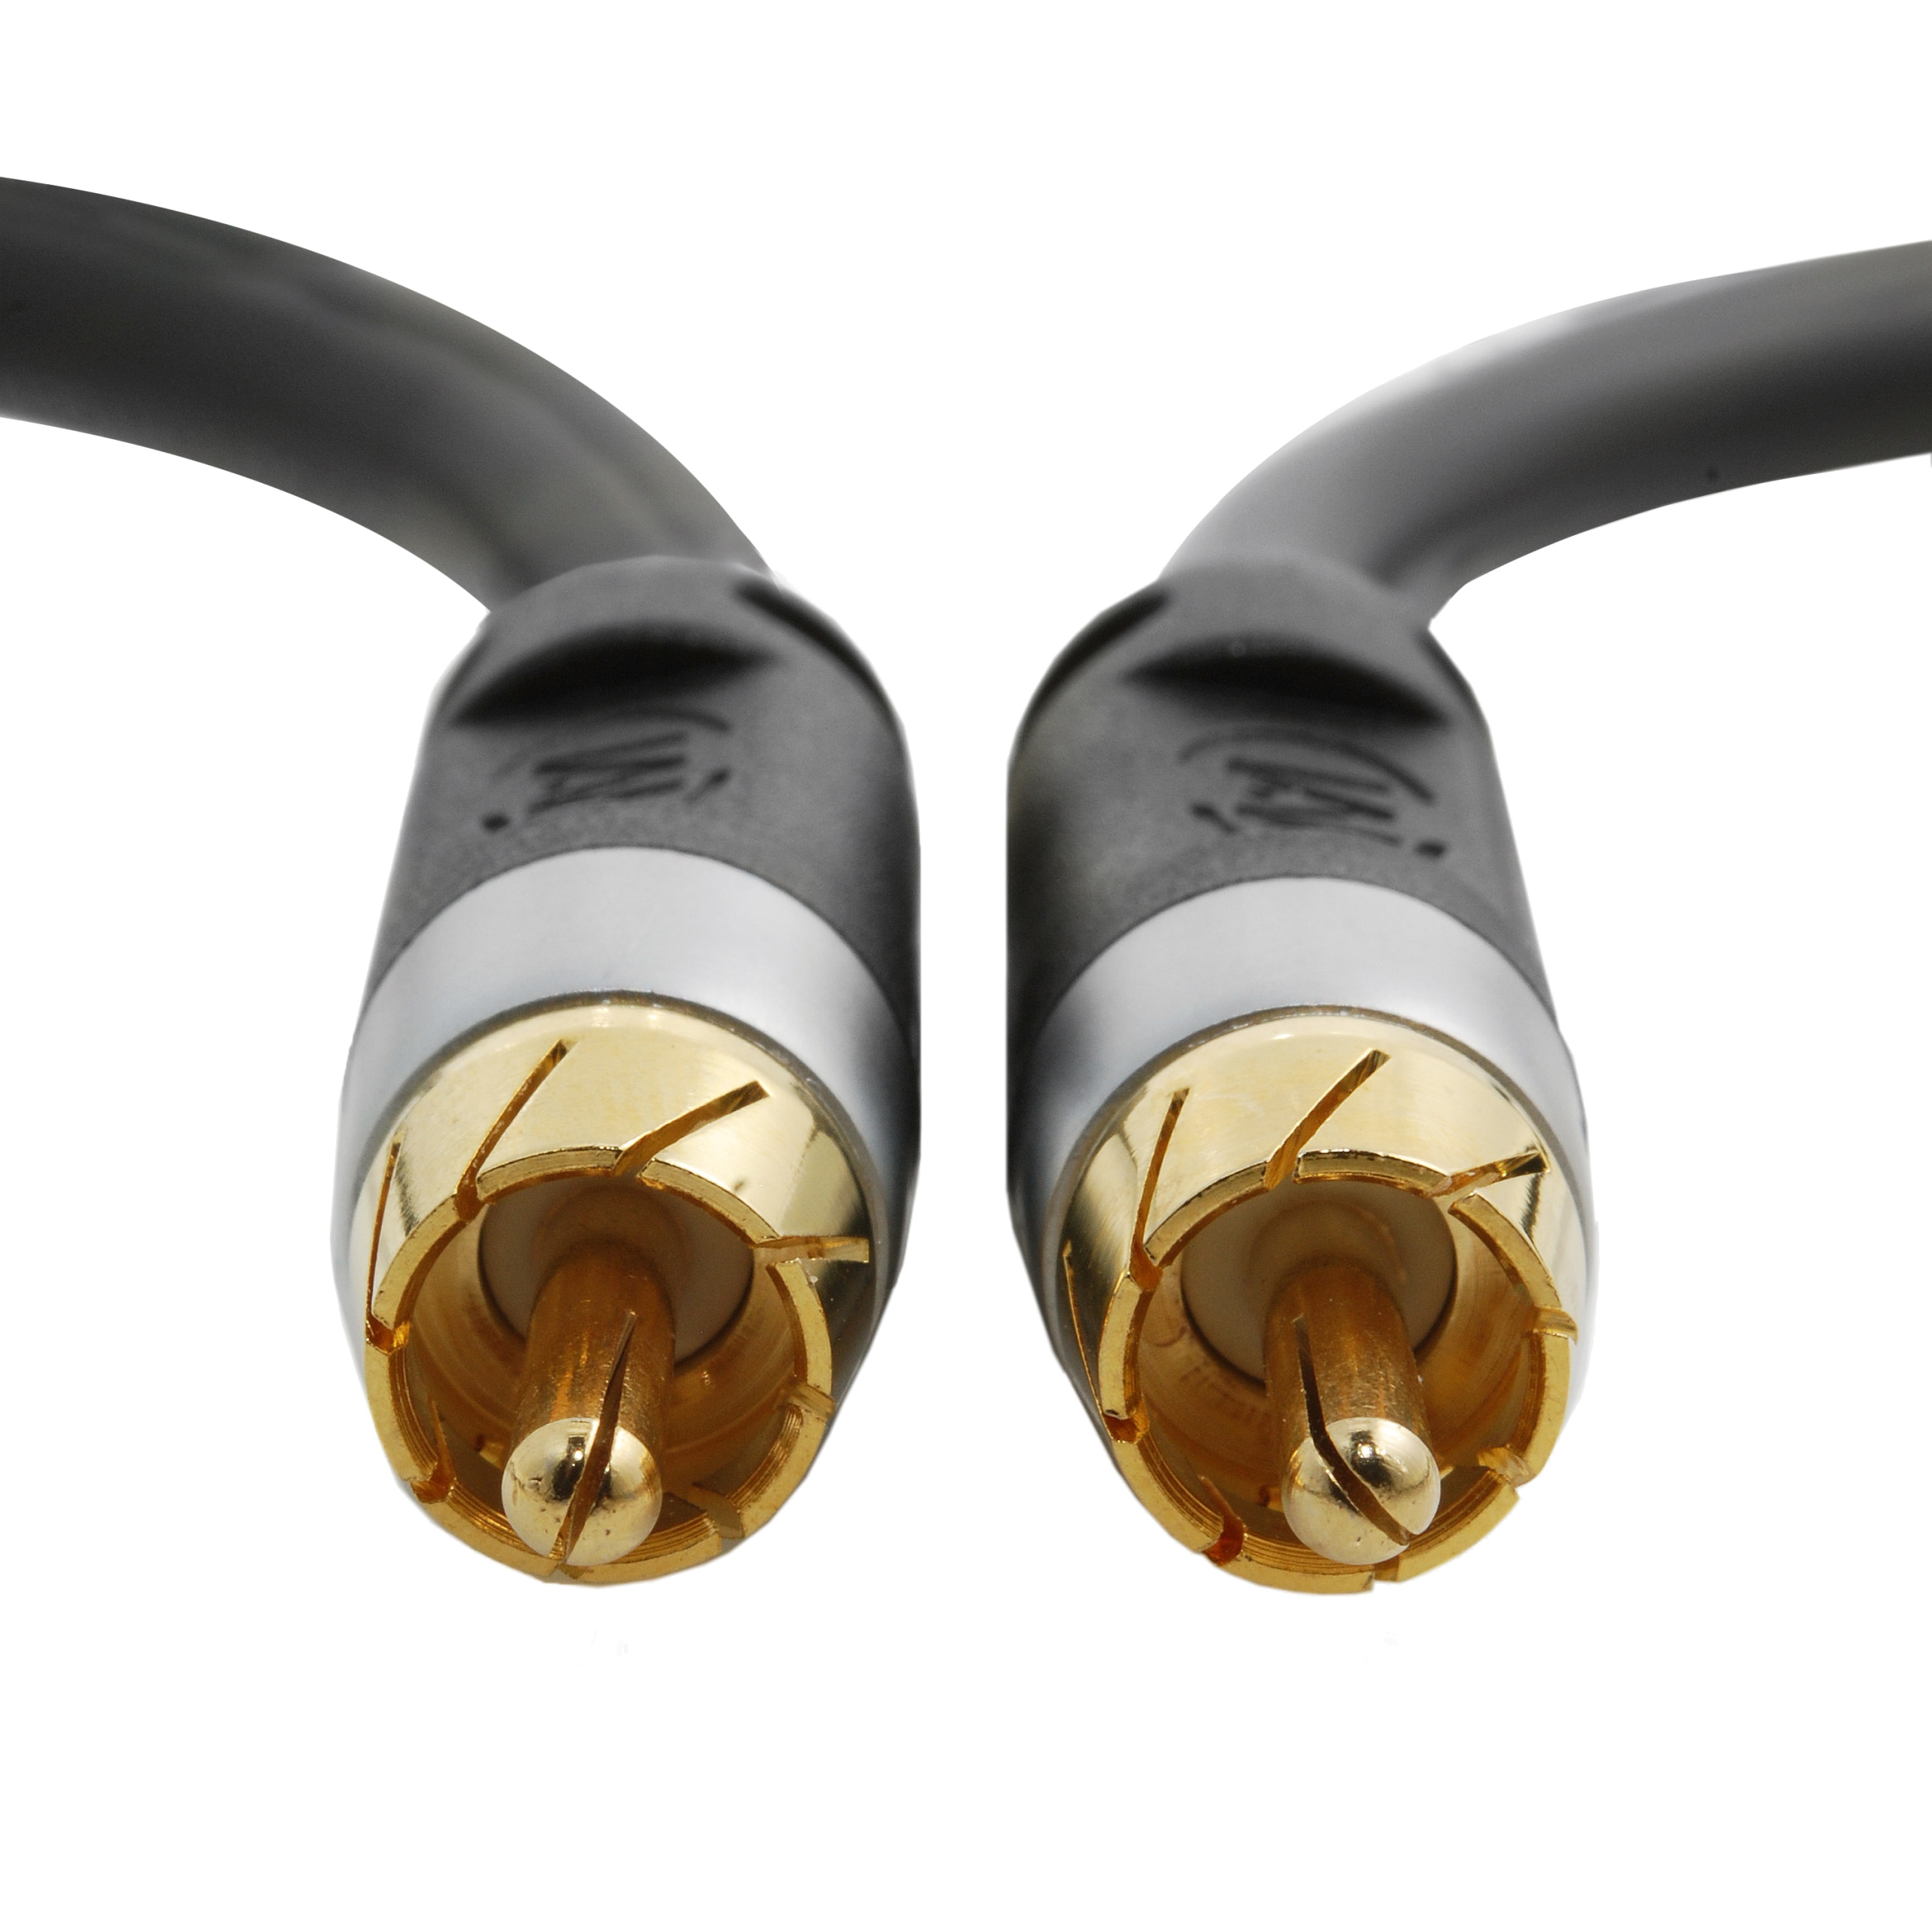 ULTRA Series Digital Audio Coaxial Cable (Black - 15 Feet)